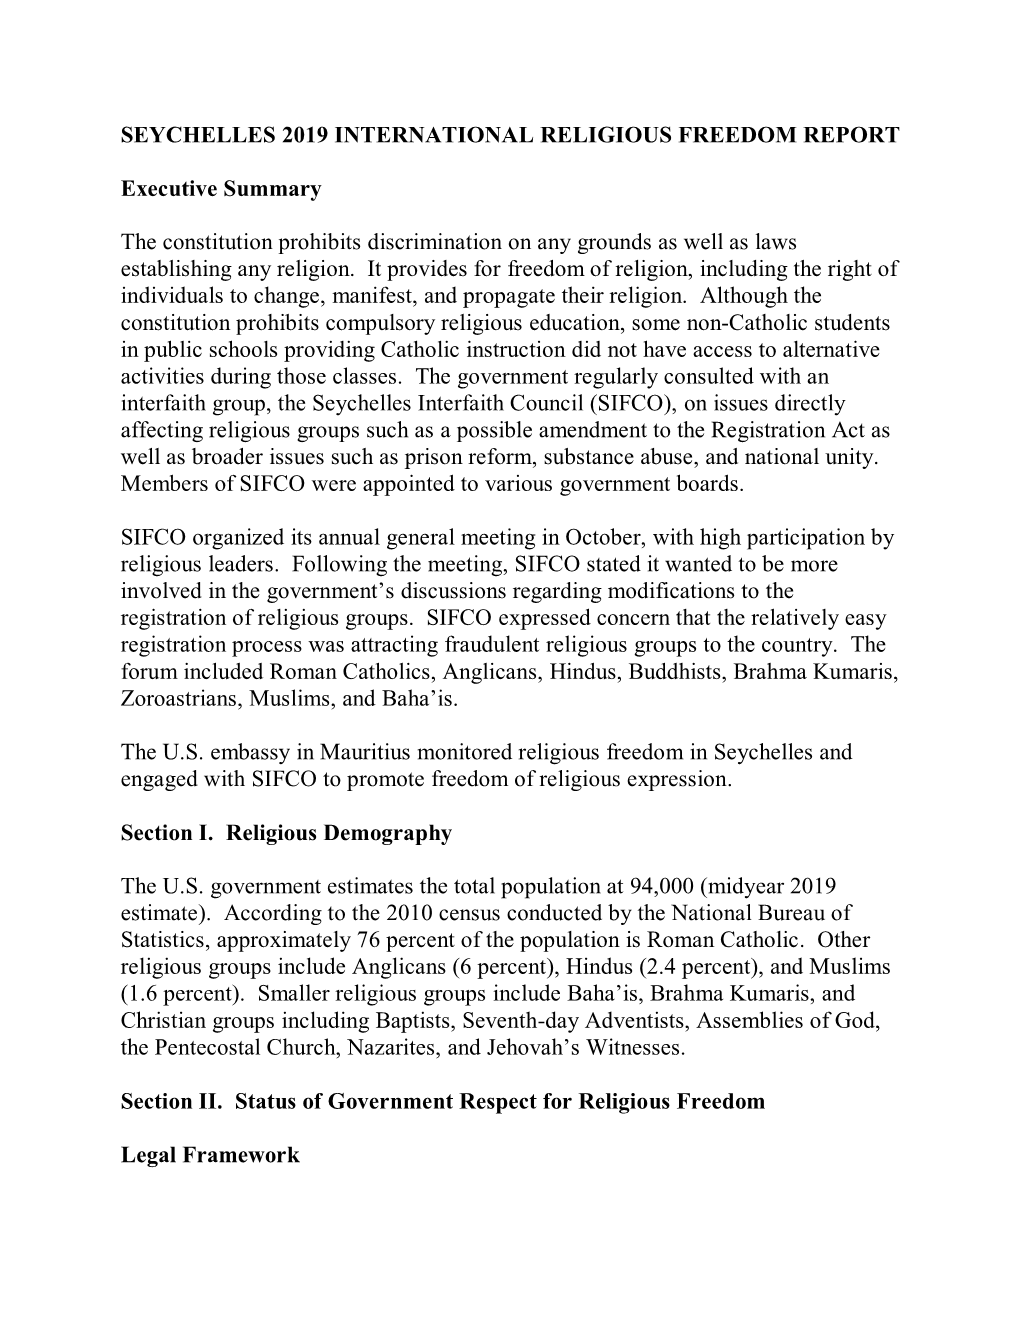 Seychelles 2019 International Religious Freedom Report